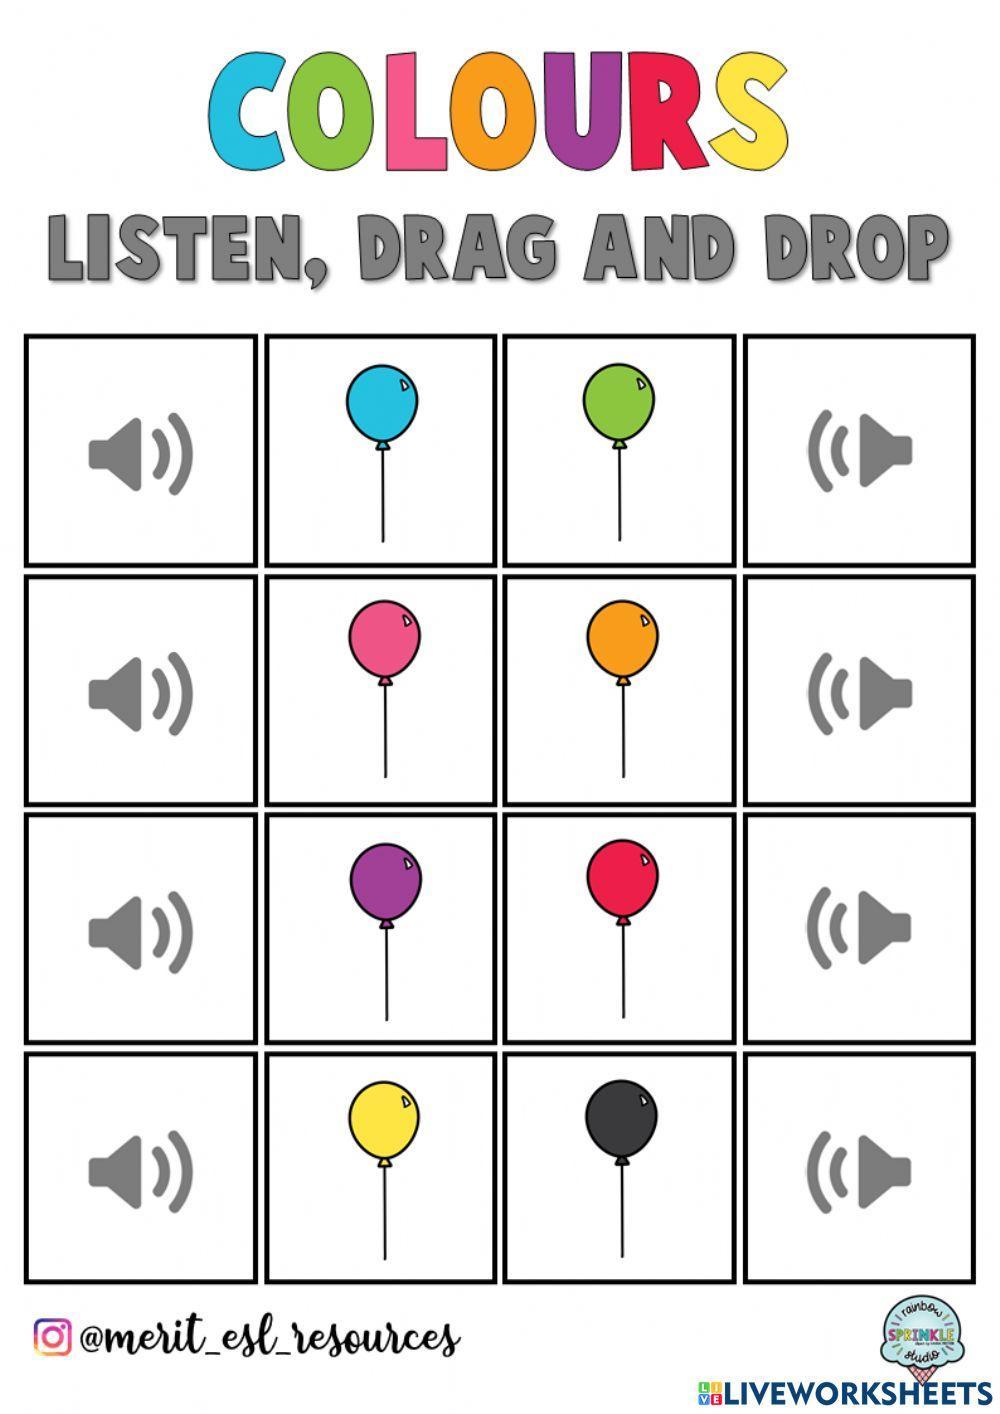 Colours - Listen, drag and drop